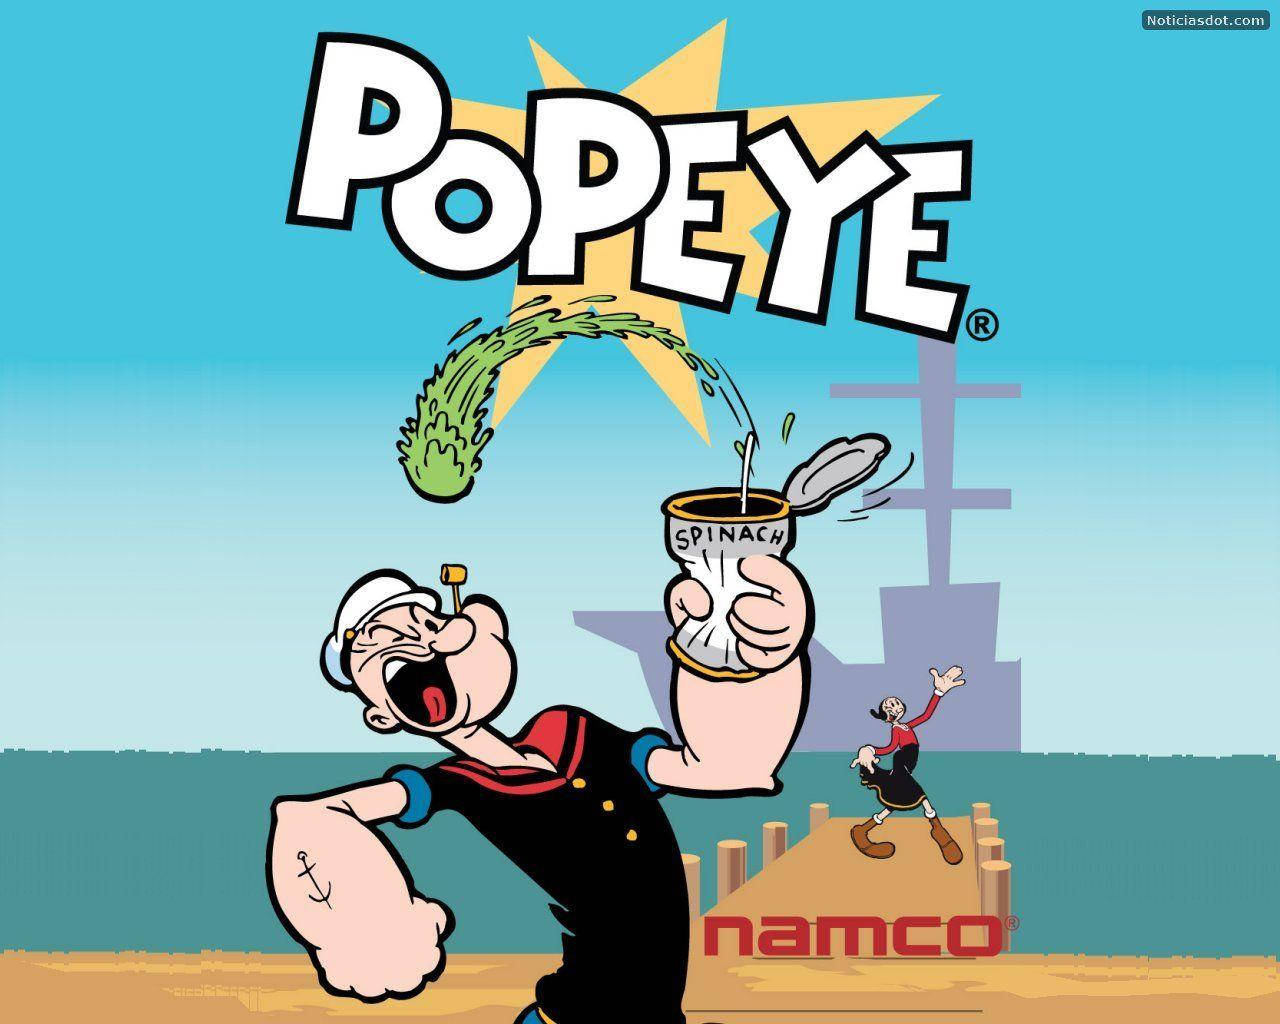 The Popeye Game Wallpaper